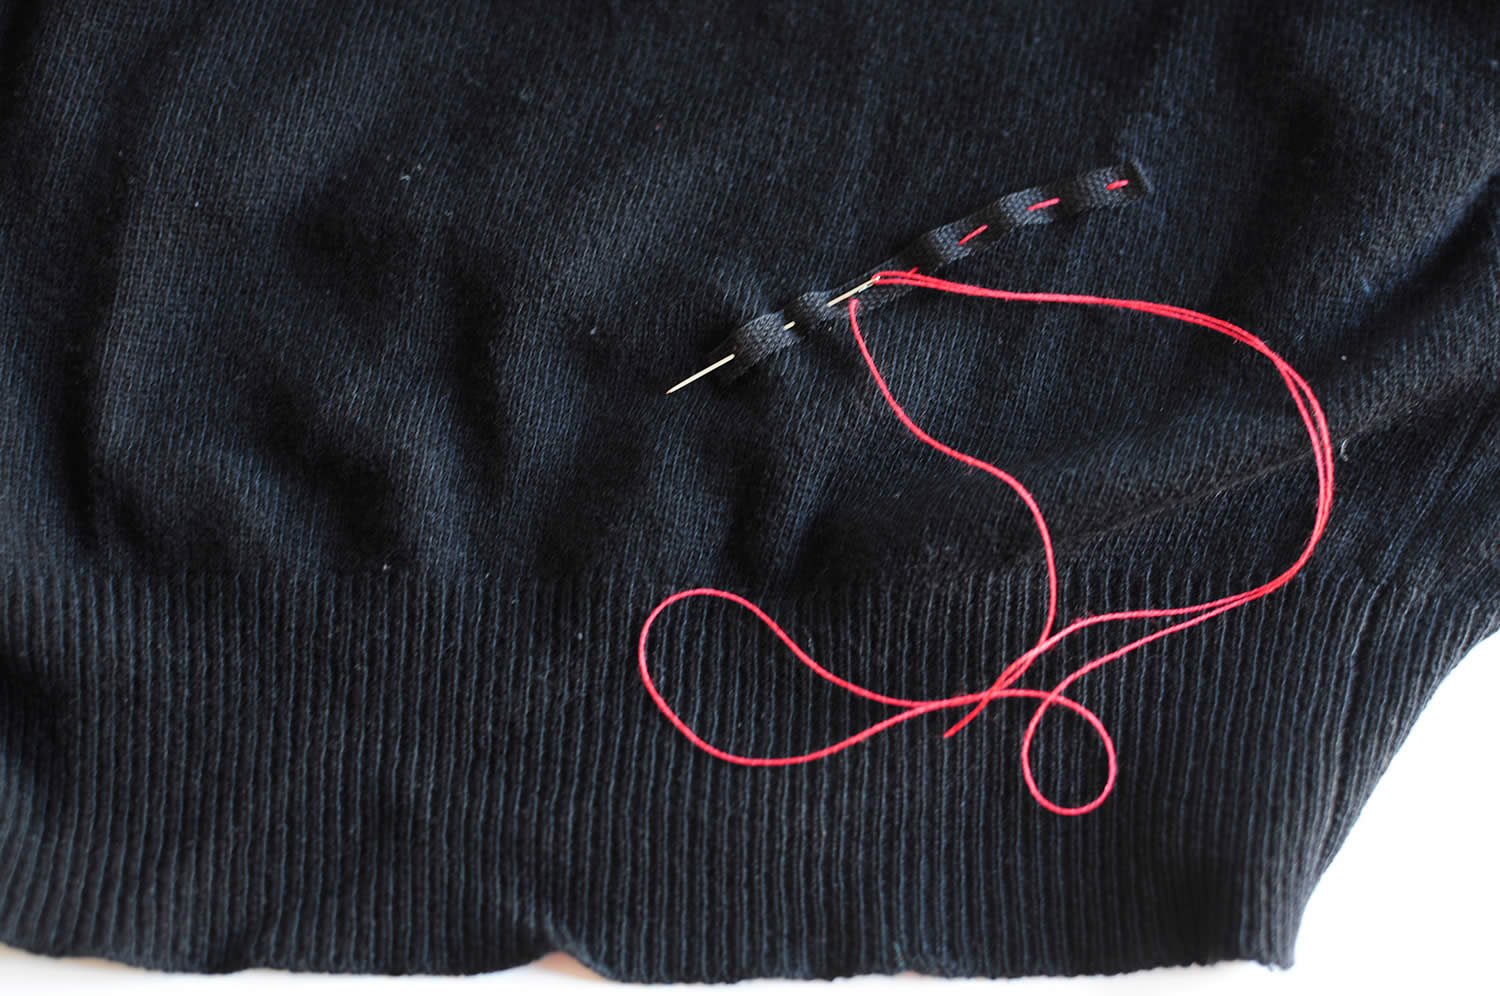 Ladulsatina sewing and DIY fashion blog - Moth-eaten wool sweater - Fashion Fix - basting